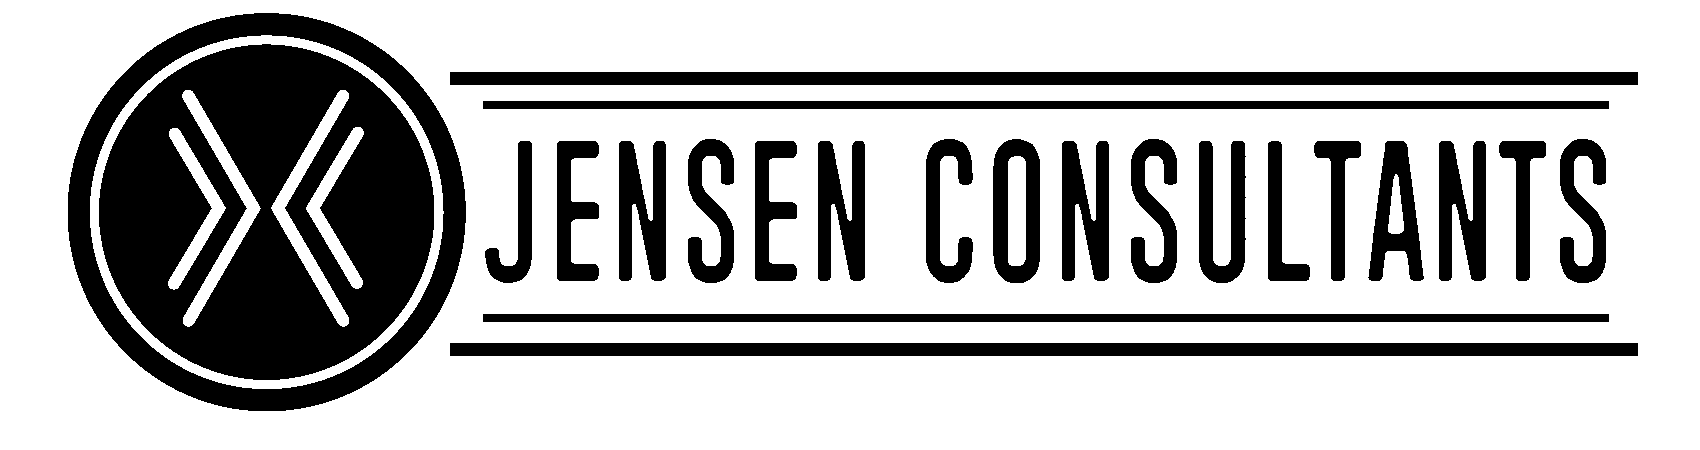 Jensen Consultants logo